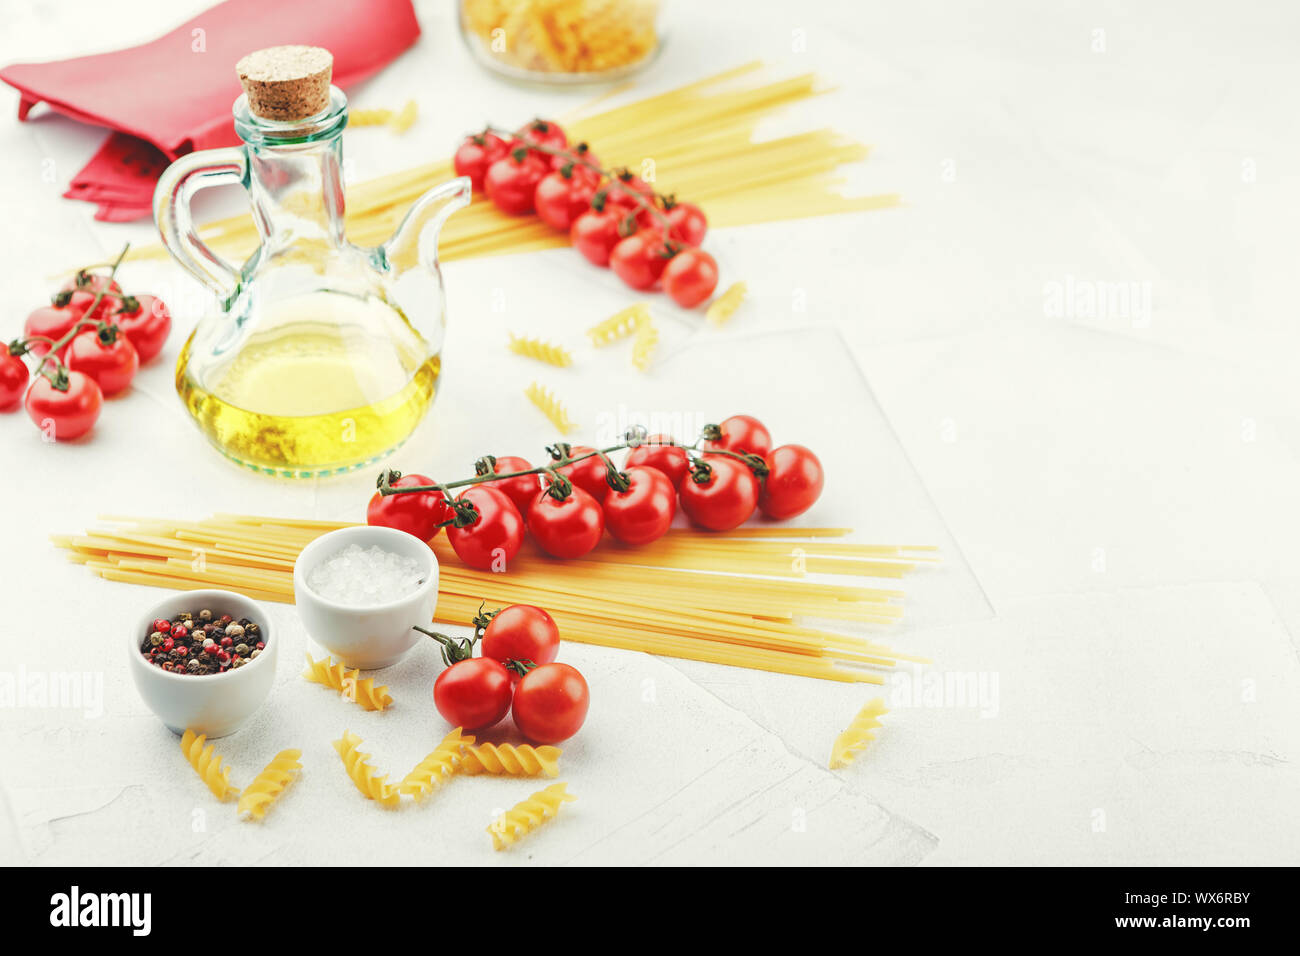 Italian Pasta with tomatoes, oil Stock Photo